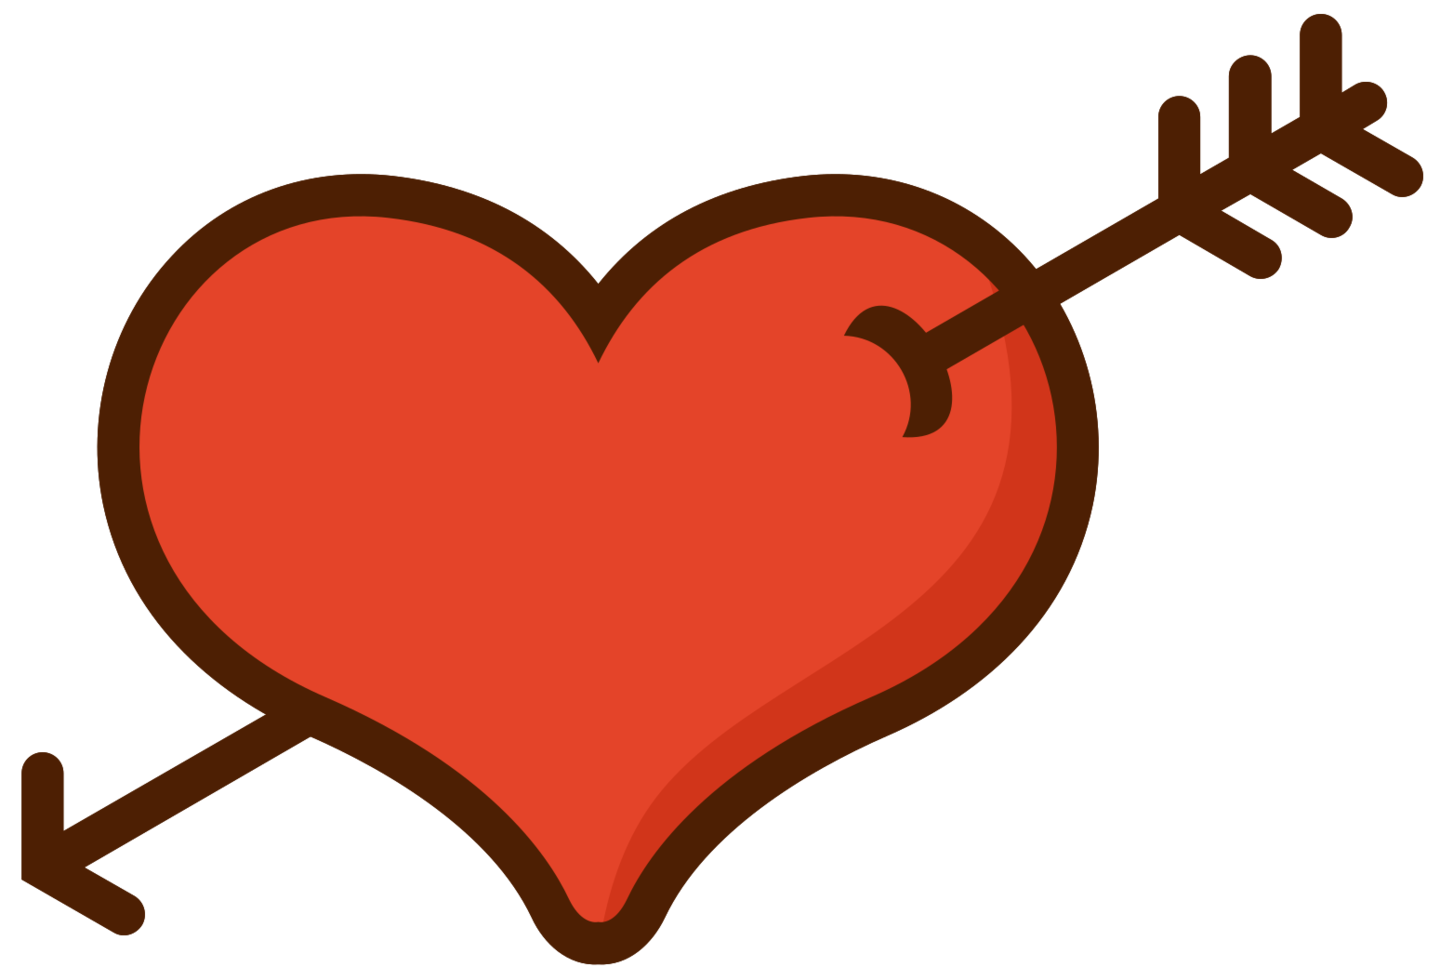 Valentine Flecha del corazón PNG imagen transparente